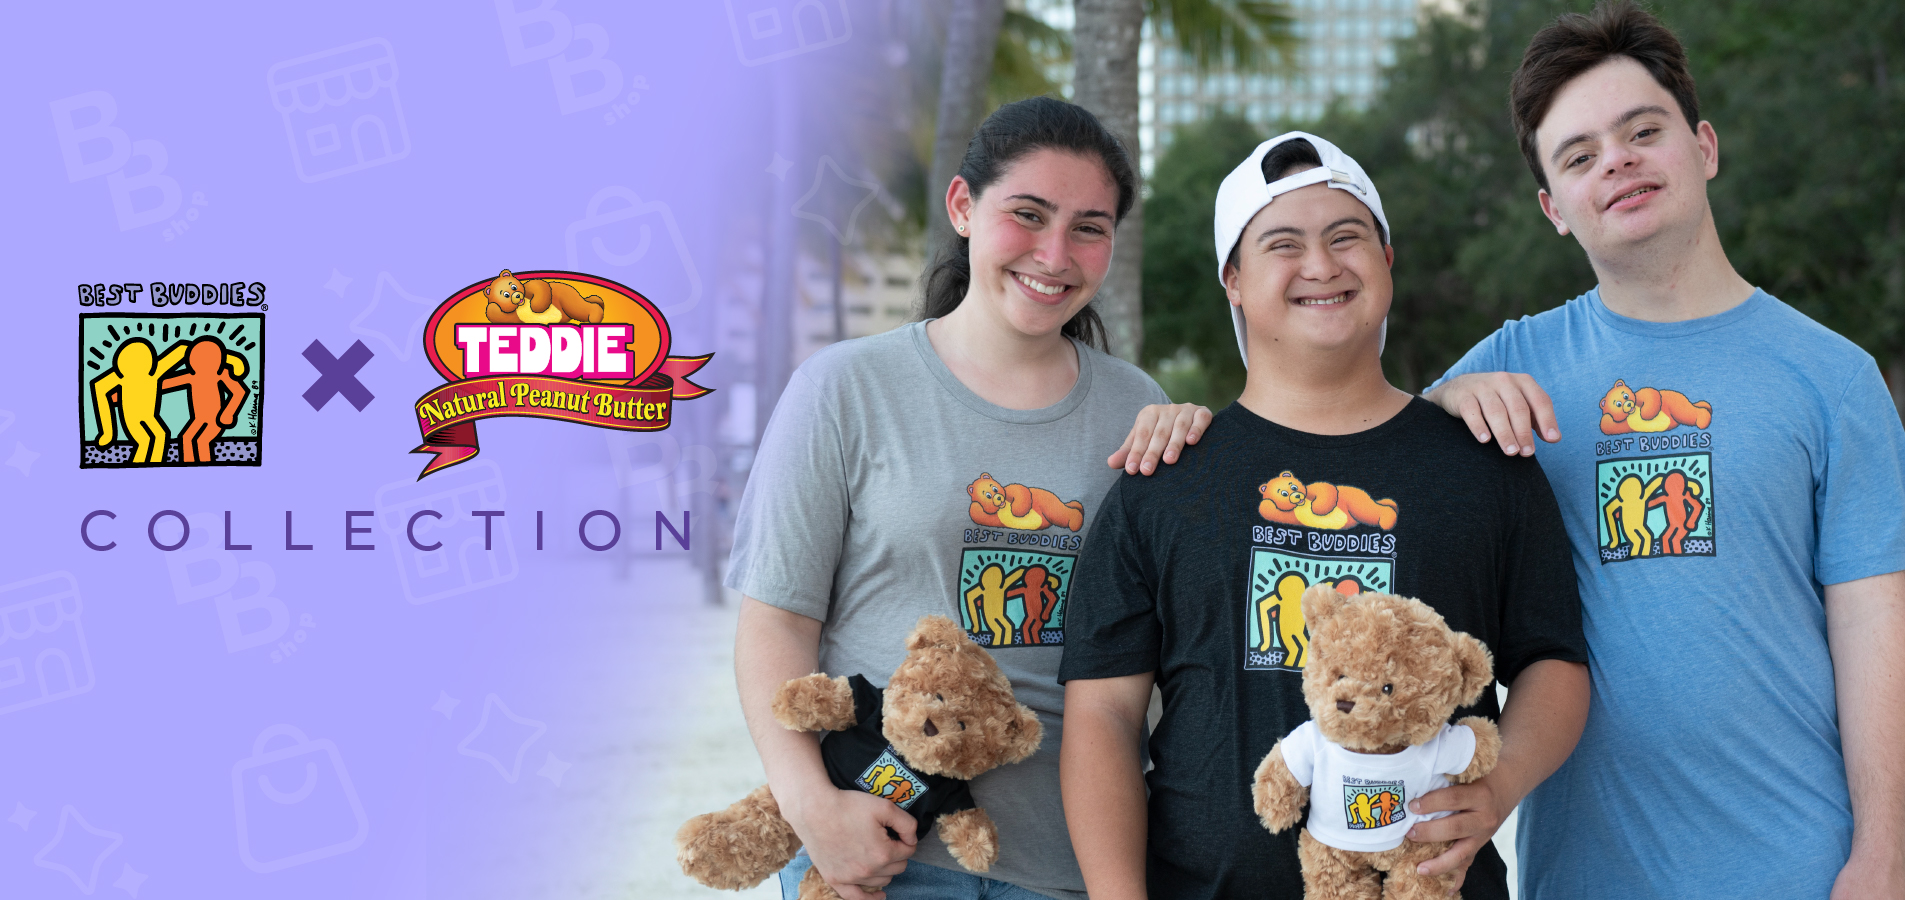 Three Best Buddies Program participants wearing Best Buddies collaboration with Teddie Peanut Butter T-shirts in downtown Miami.